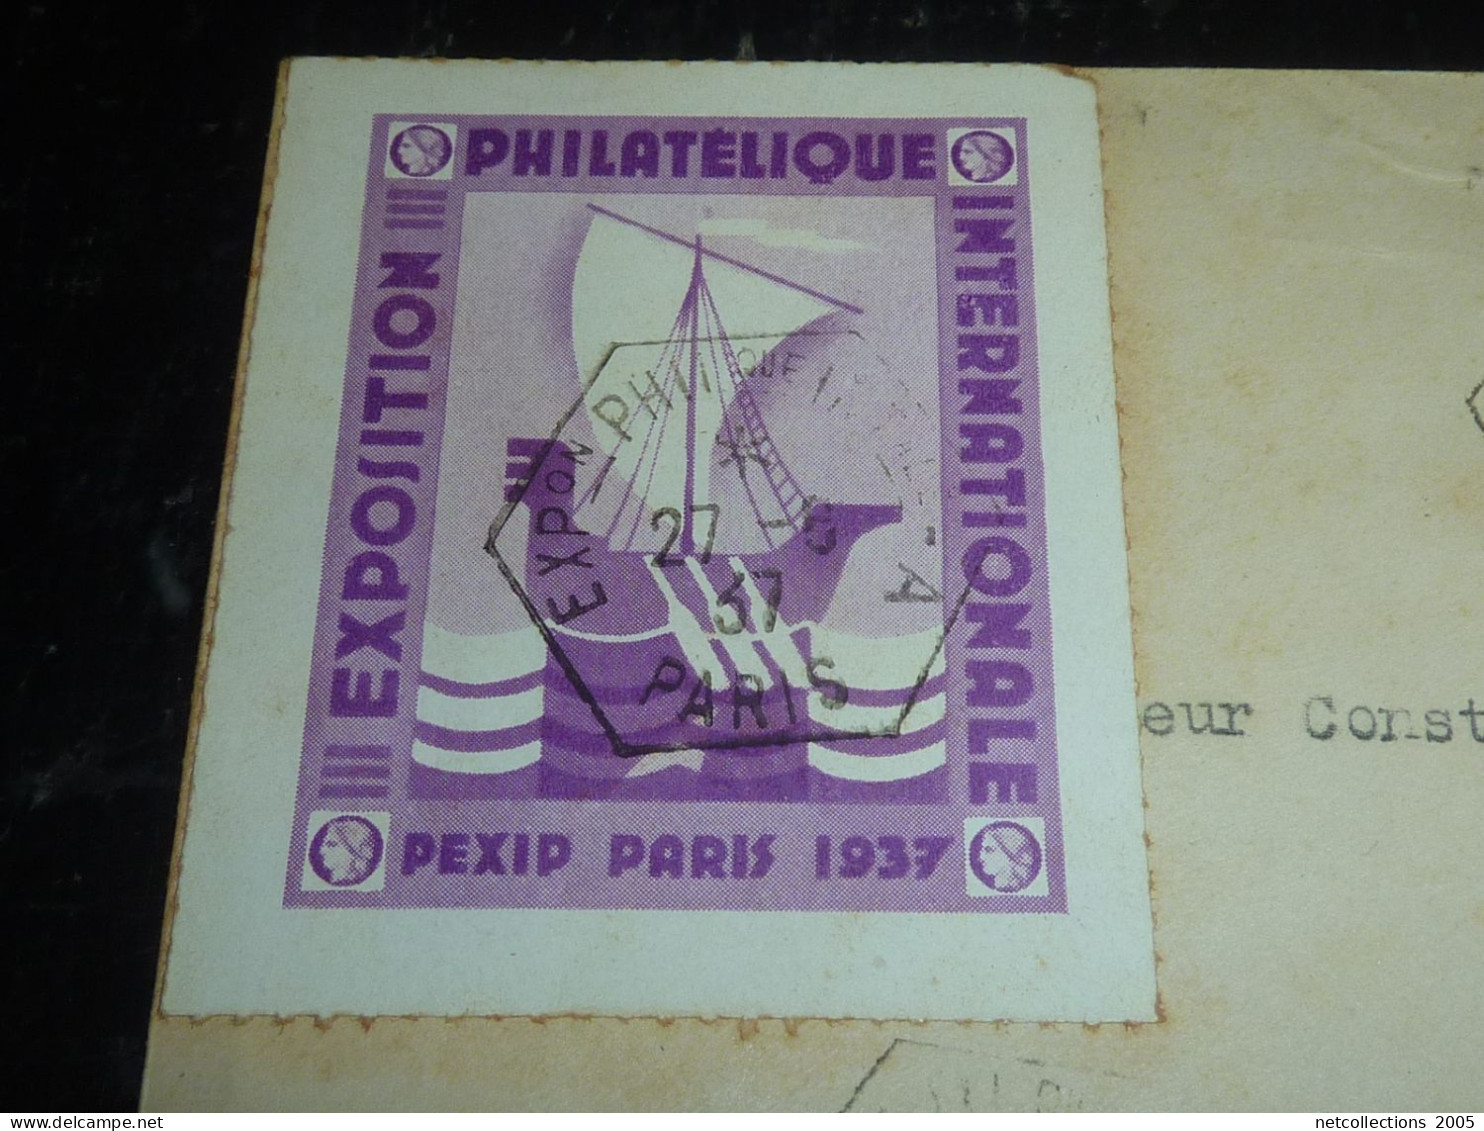 EXPOSITION PHILATELIQUE PEXIP PARIS 1937 - CACHET HEXAGONAL + TIMBRE N°329 + VIGNETTE (20/09) - Filatelistische Tentoonstellingen